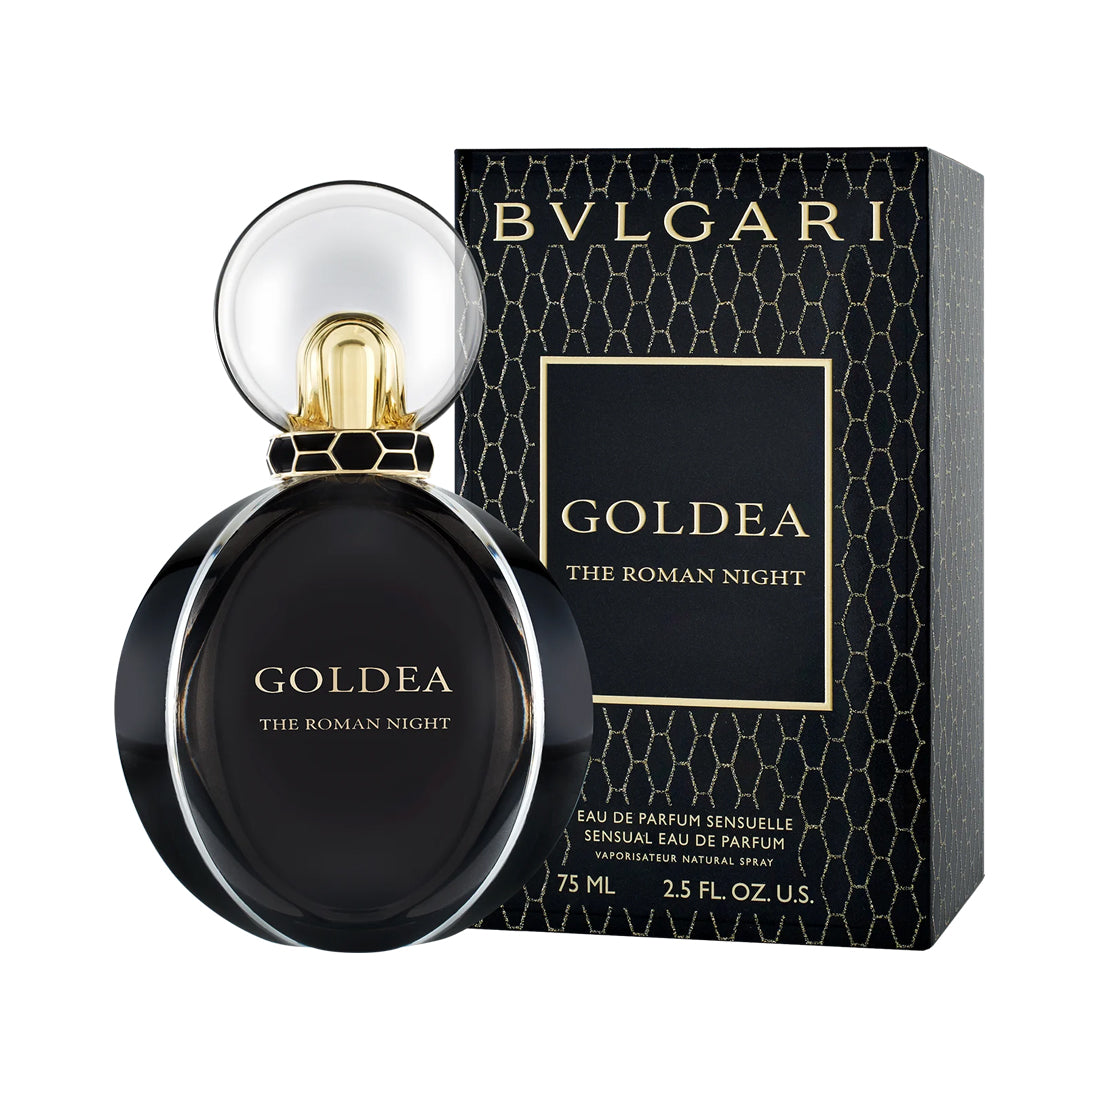 BVLGARI Goldea The Roman Night Eau de Parfum 75ml for Women